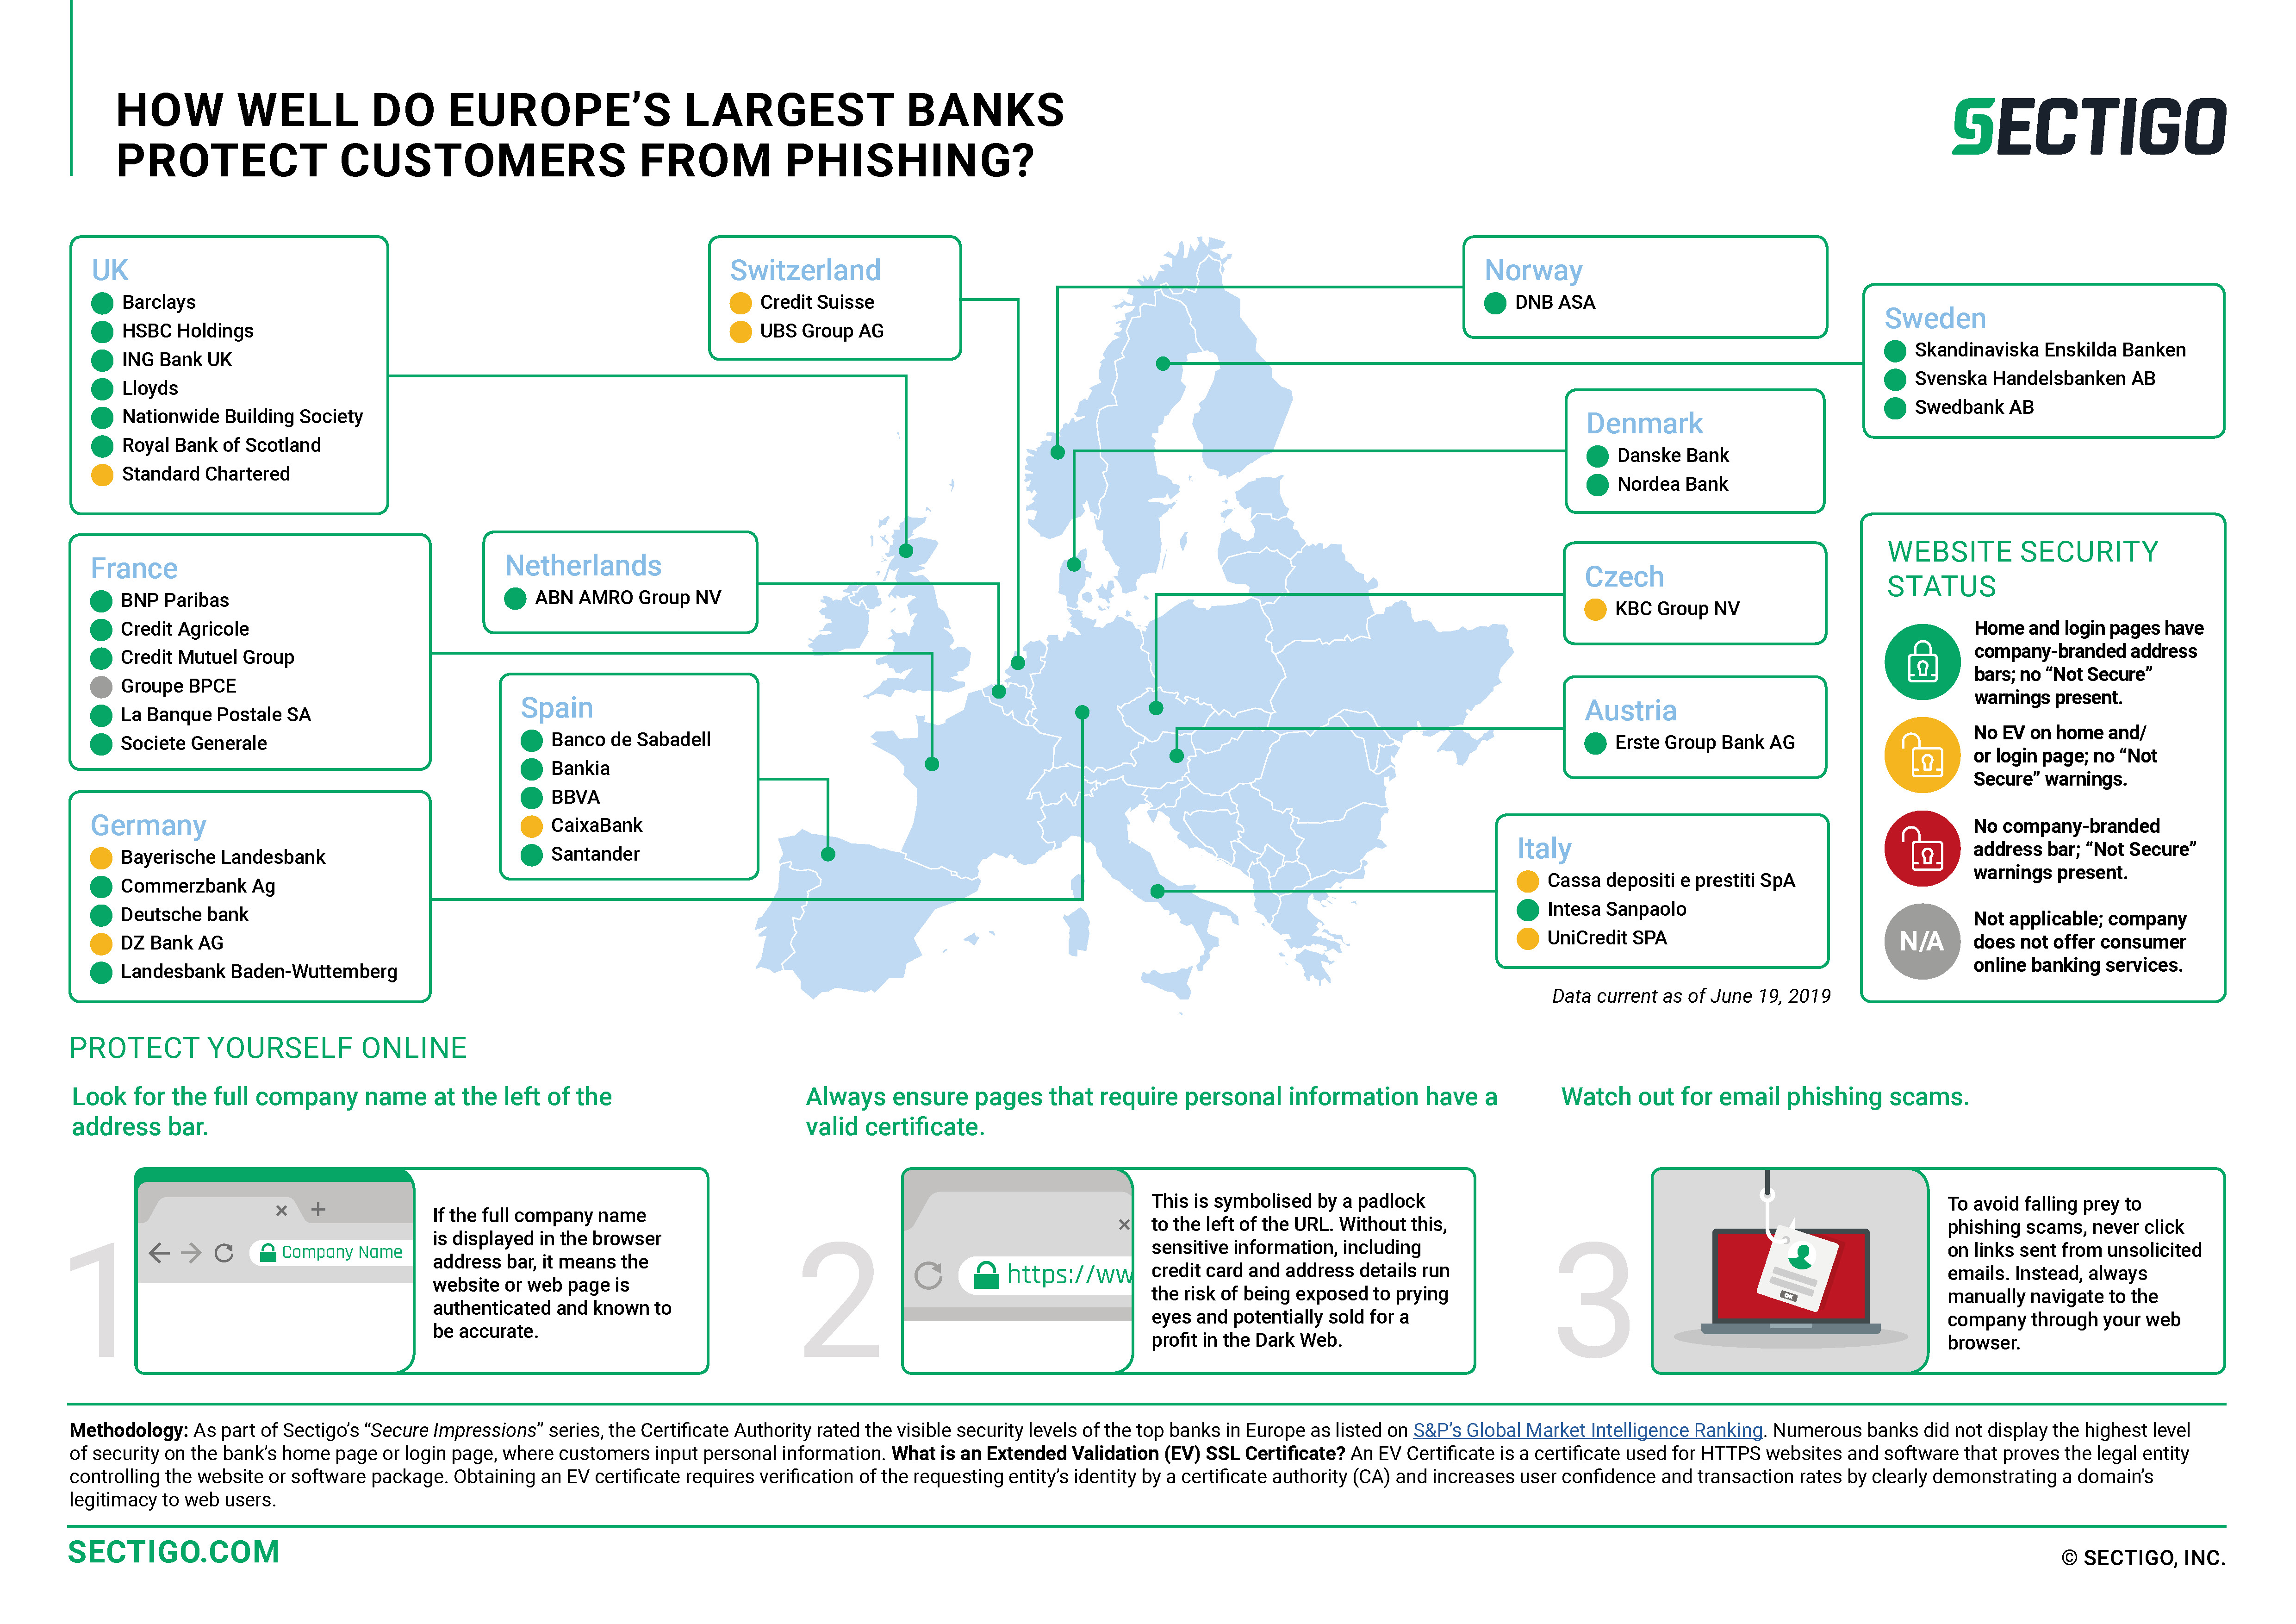 Sectigo infographic - European banks and phishing